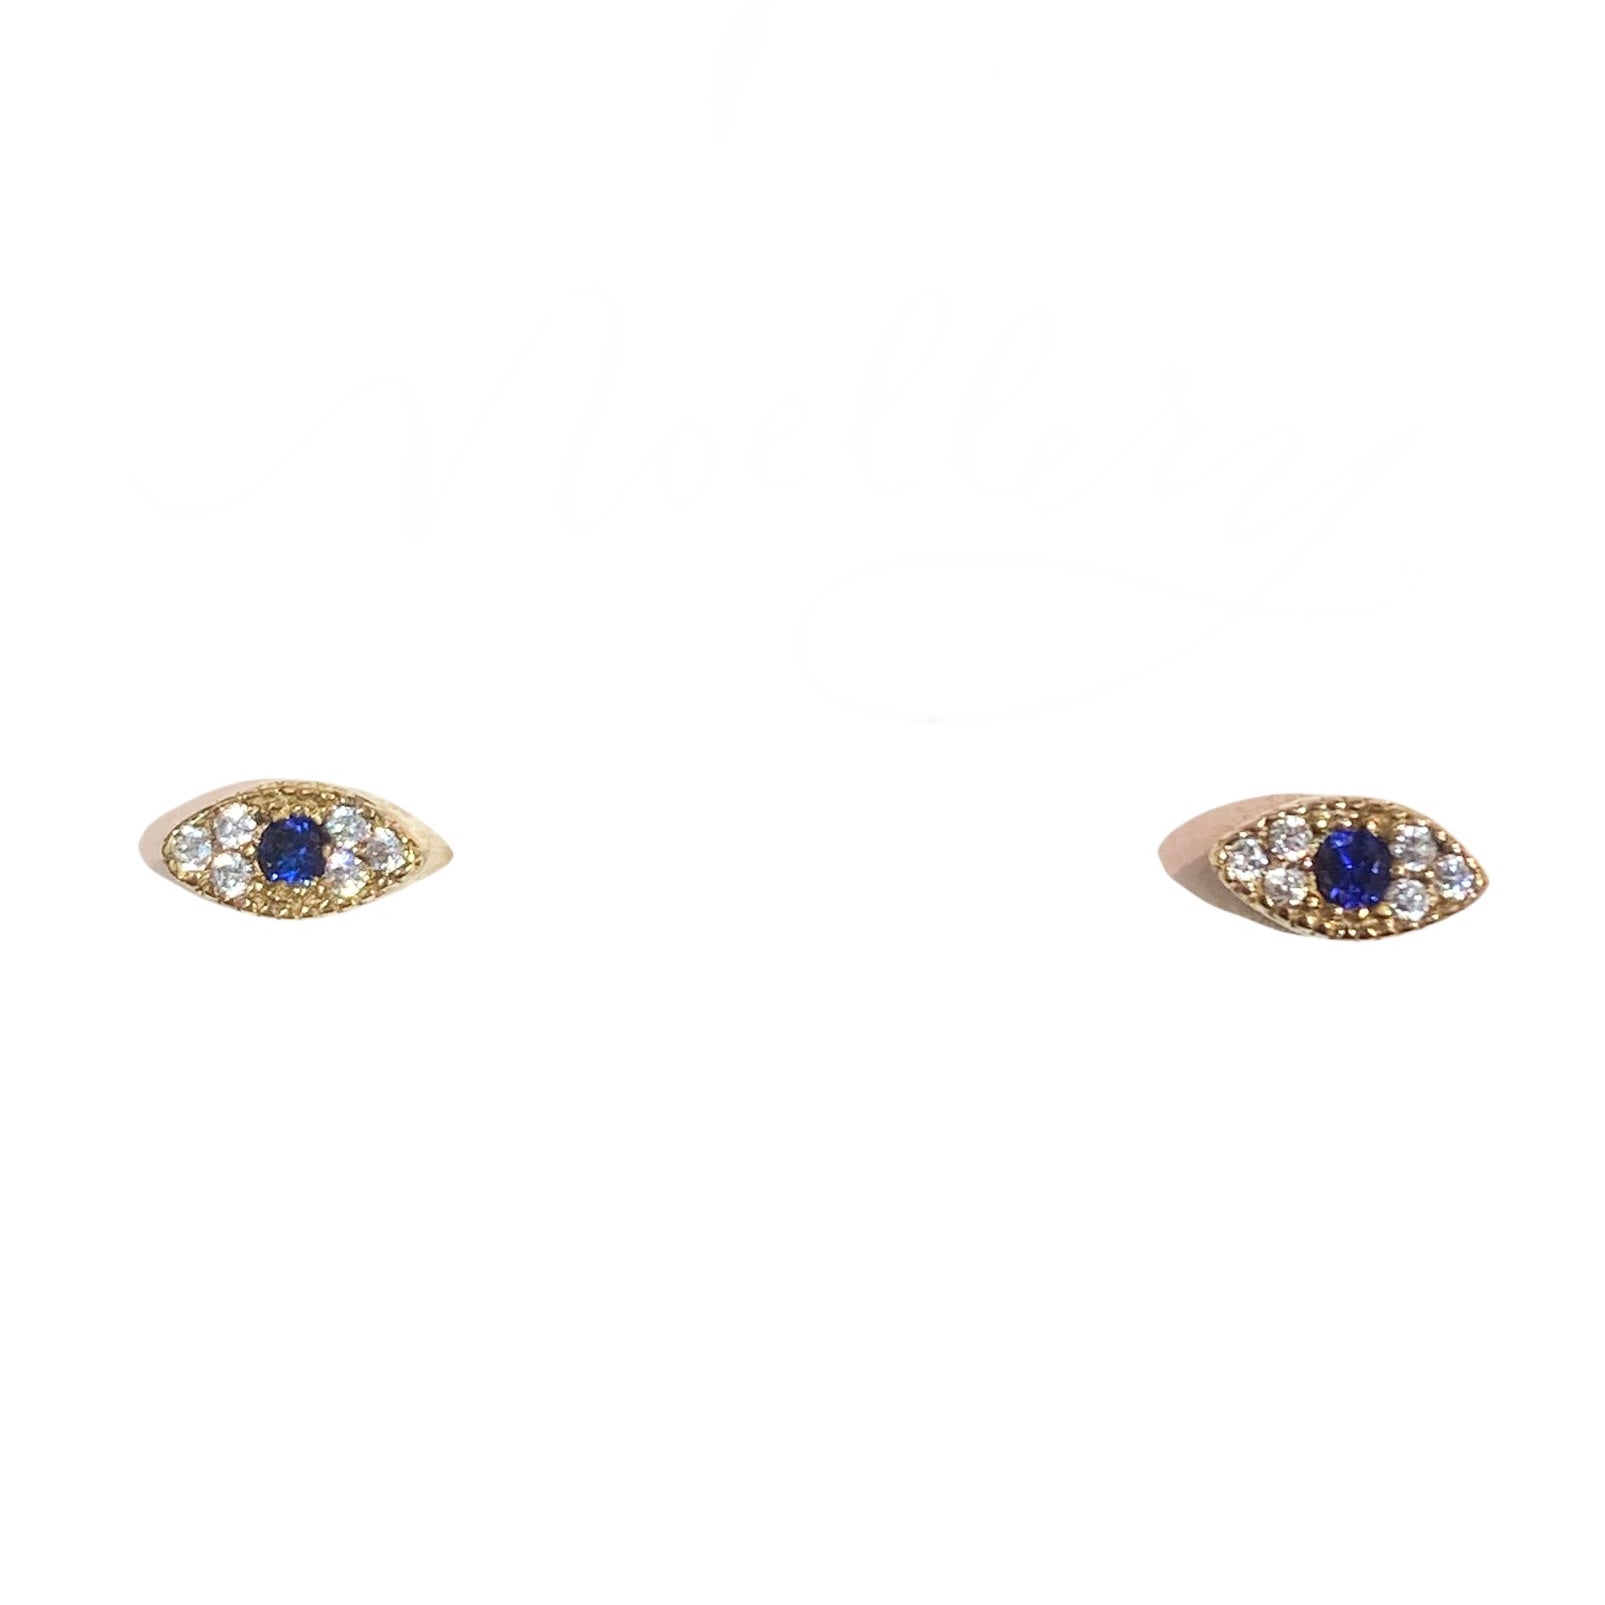 Evil Eye Shaped Sapphire Studs